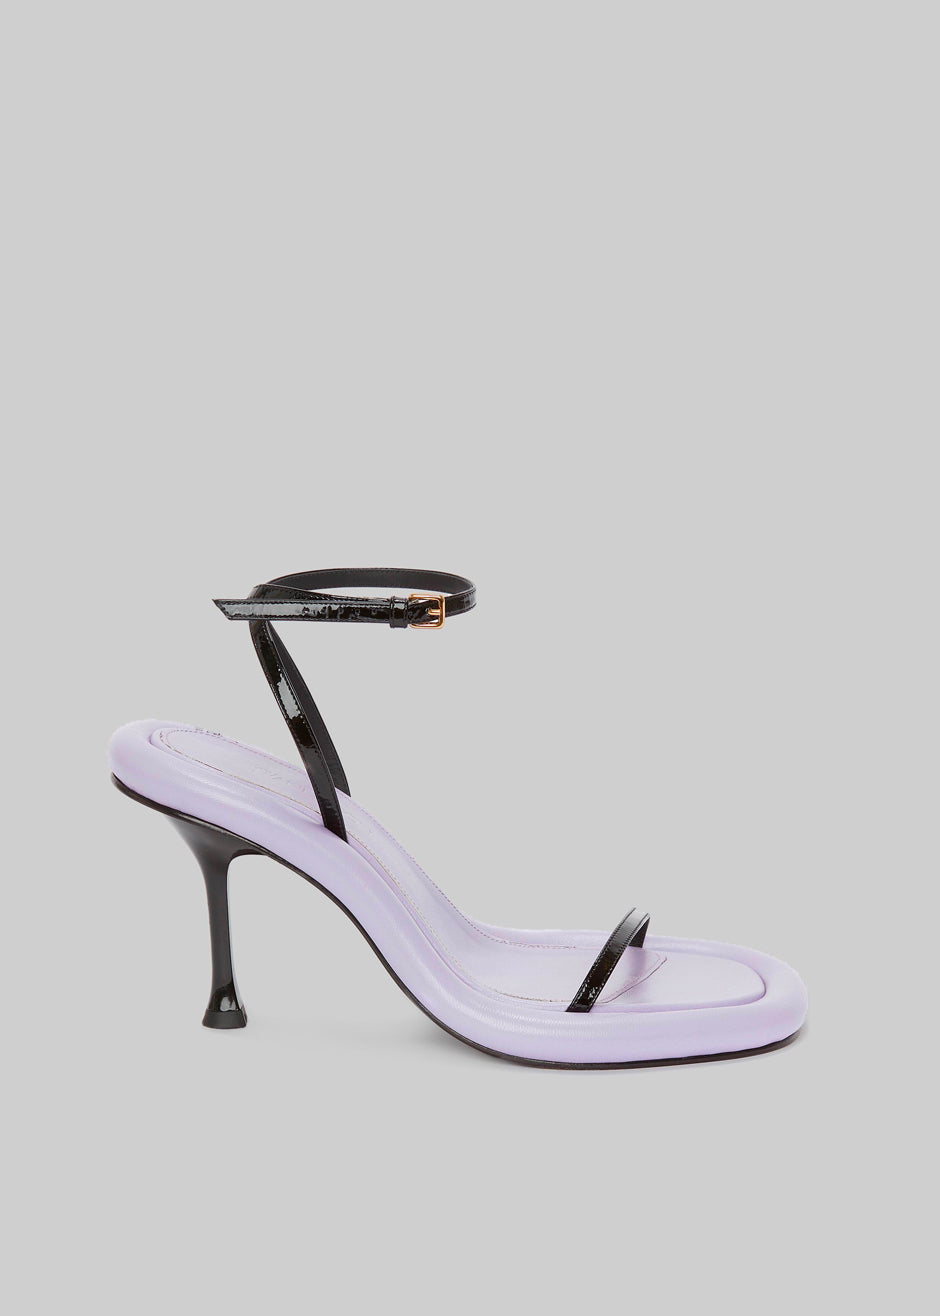 JW Anderson Bumper Heel Sandal - Lilac/Black - 1